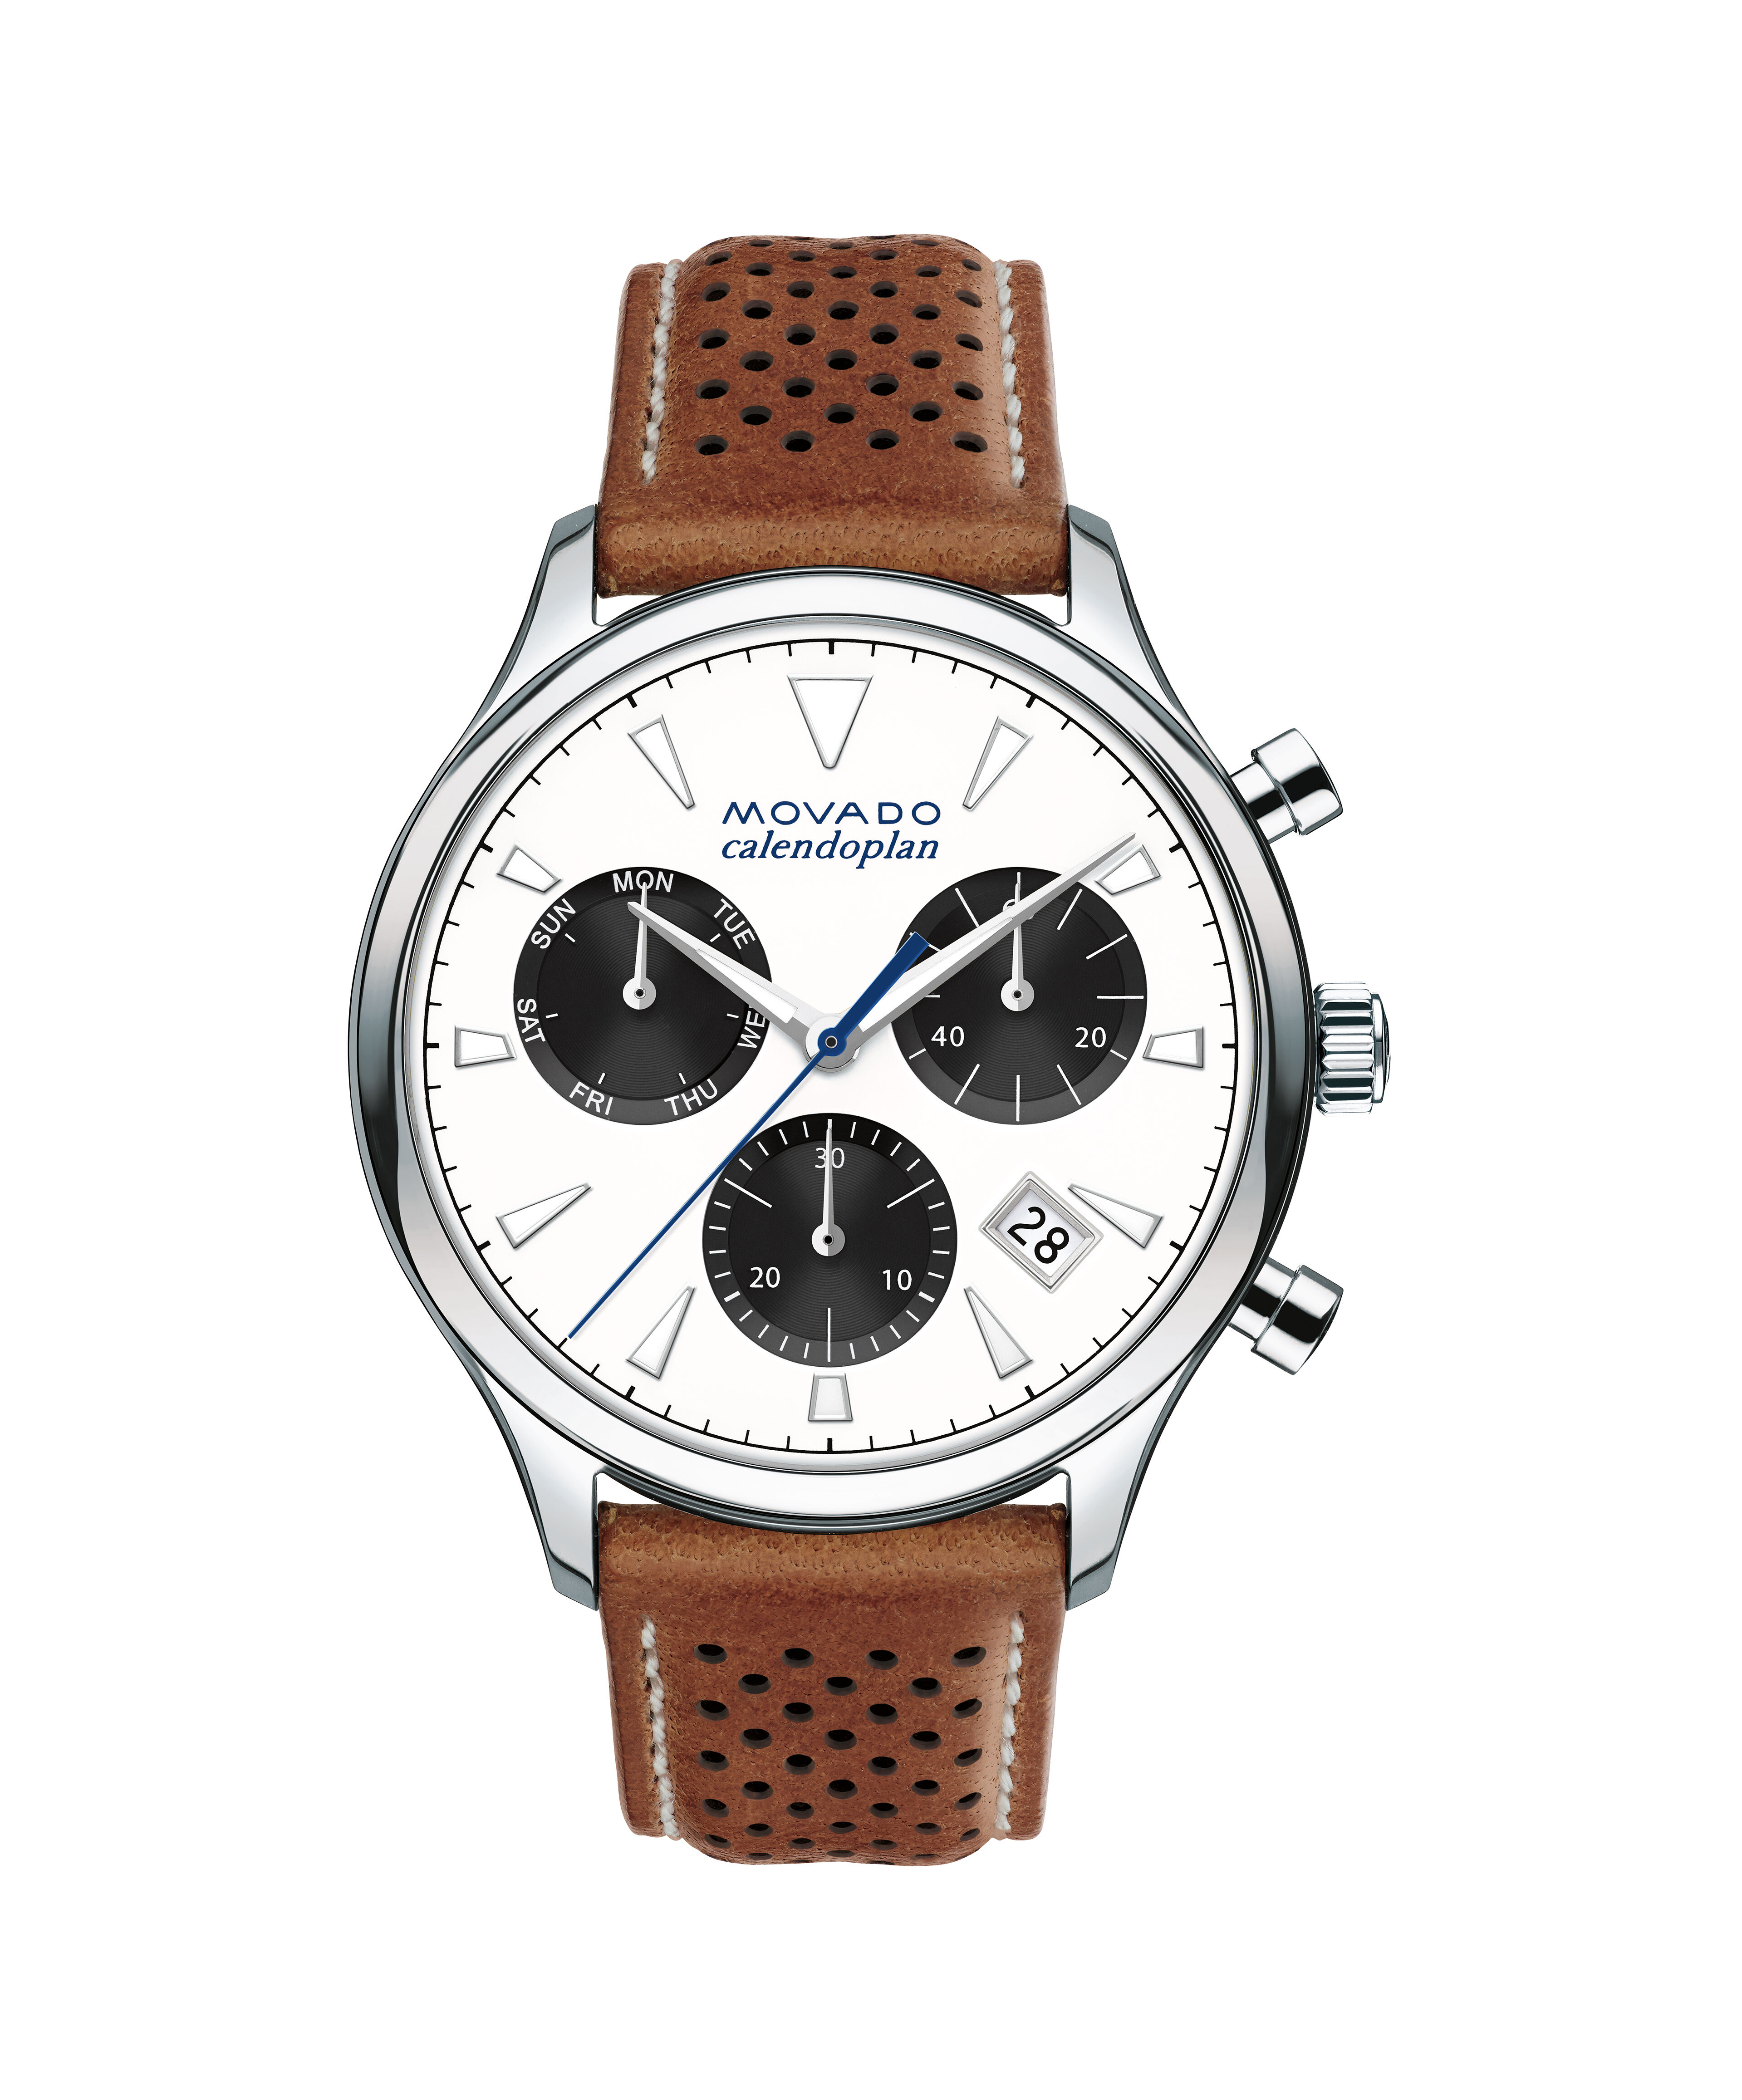 Replica Movado Watches For Sale